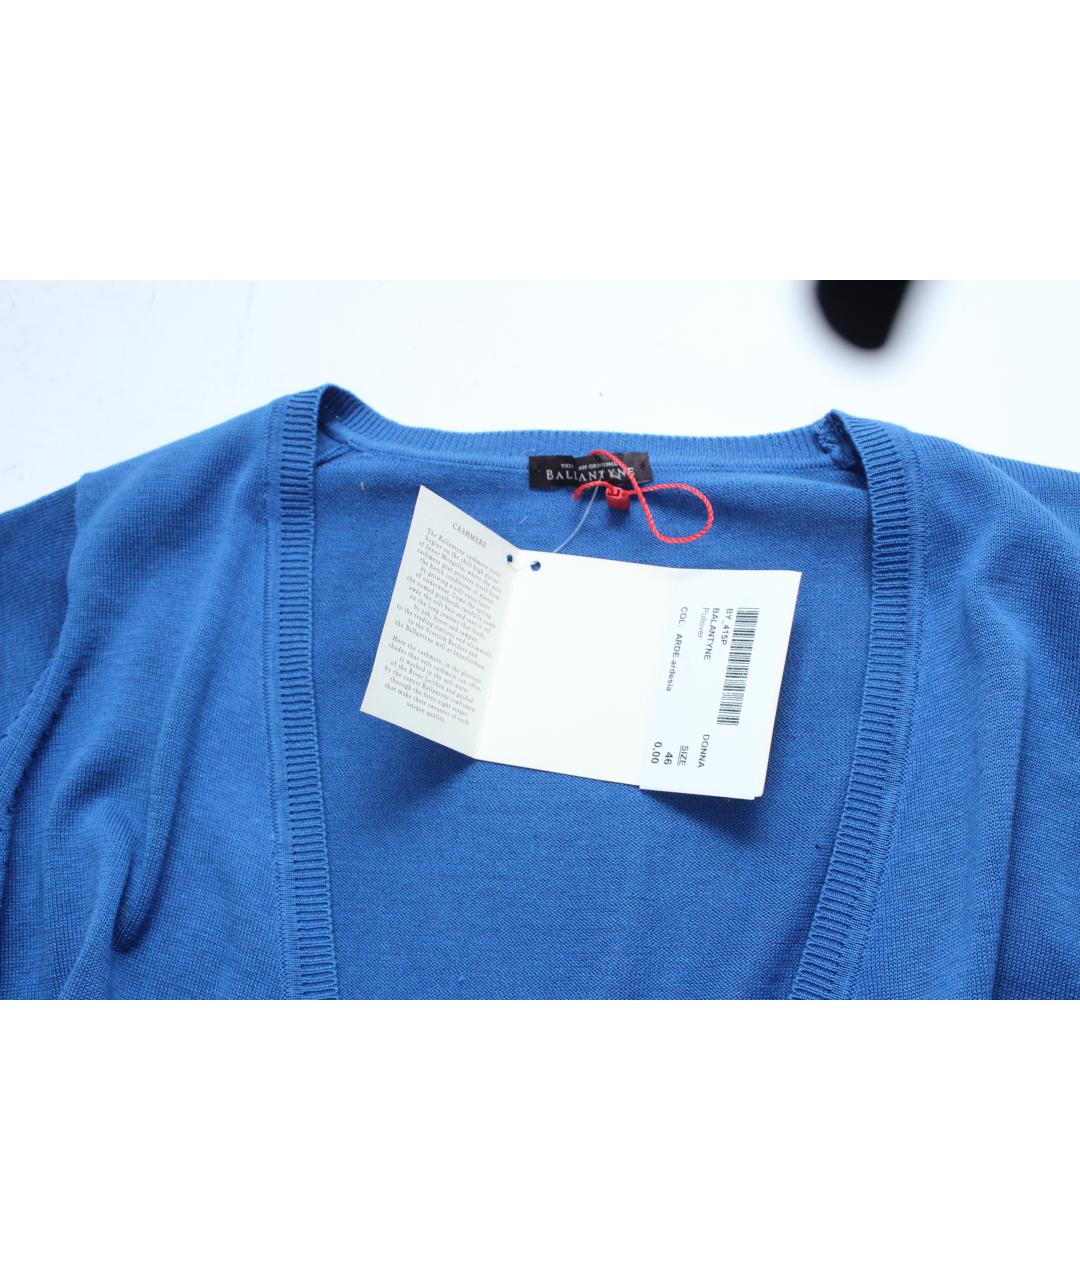 BALLANTYNE Голубой шелковый джемпер / свитер, фото 5